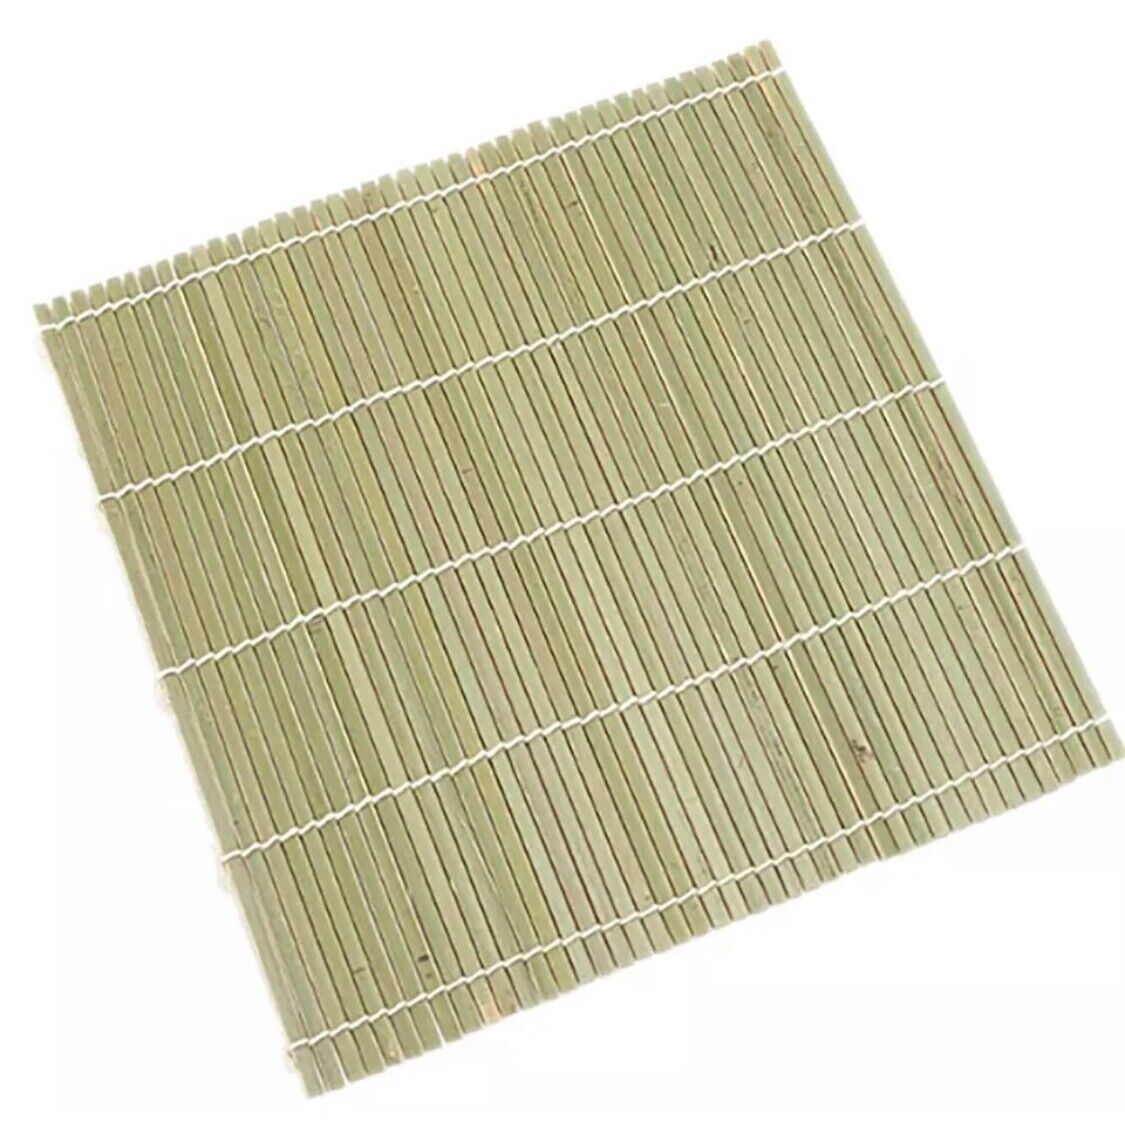 Kitcheniva Bamboo Sushi Roller Mat 9.4 x 9.4